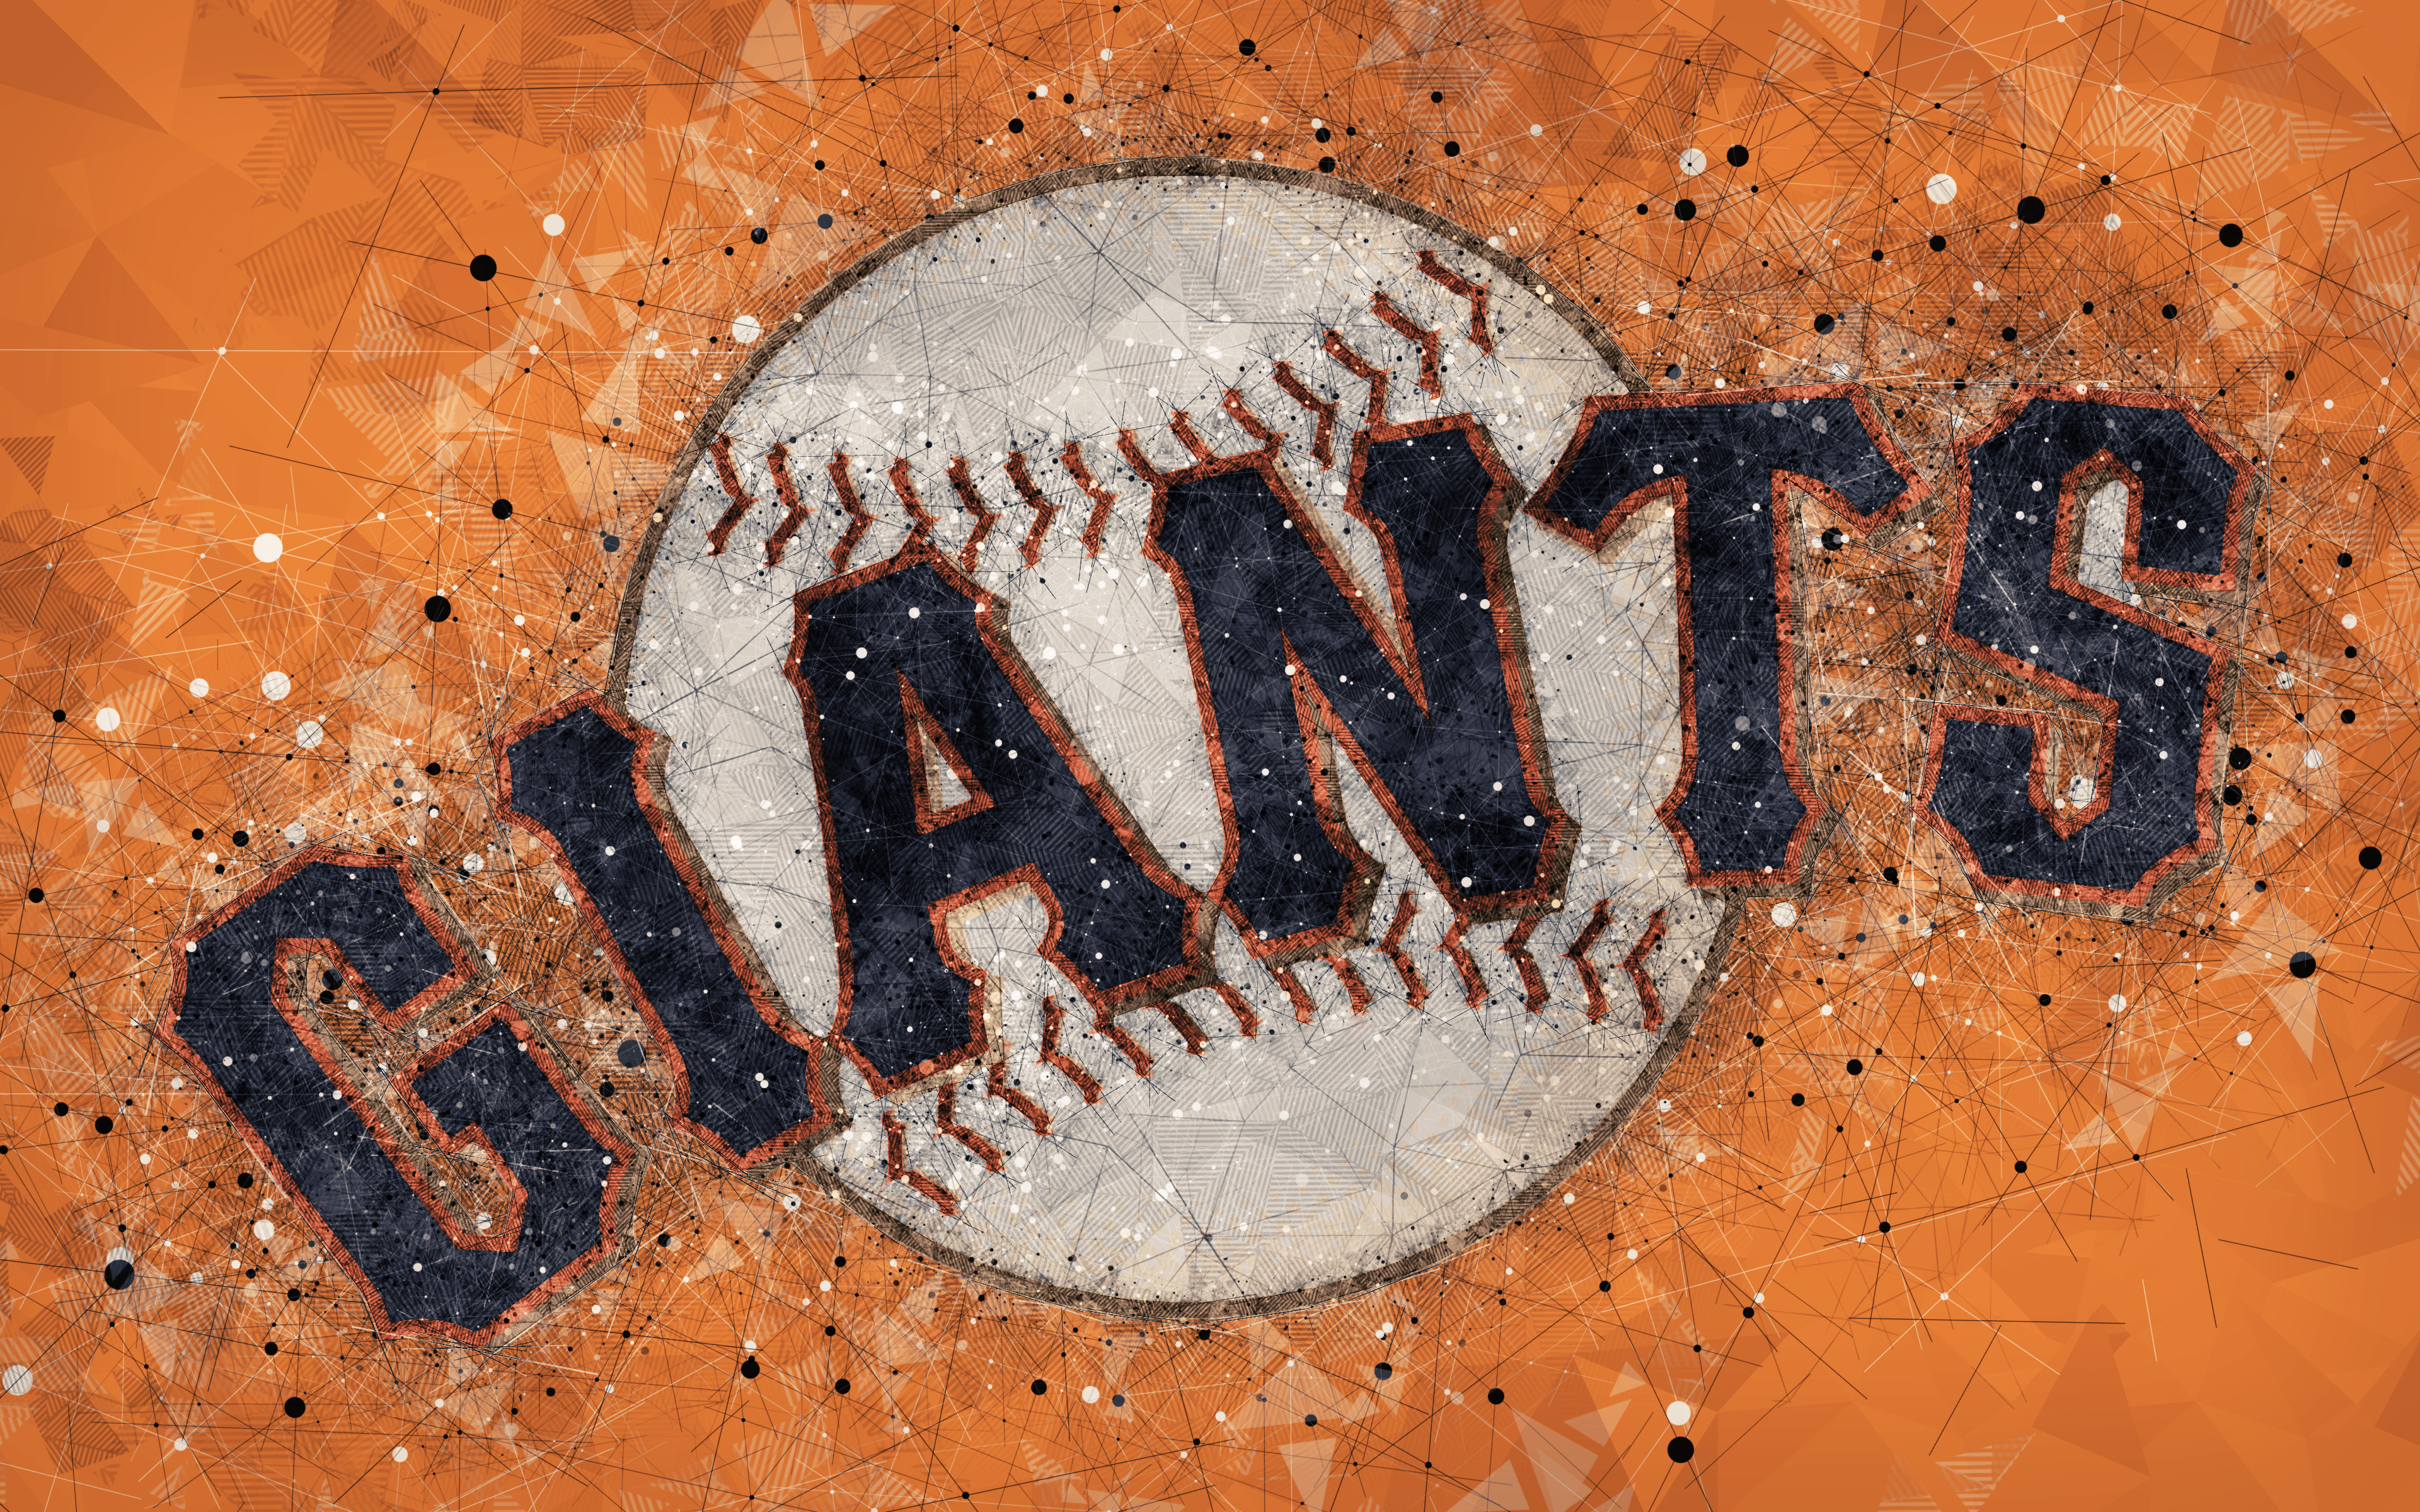 wallpaper giants baseball